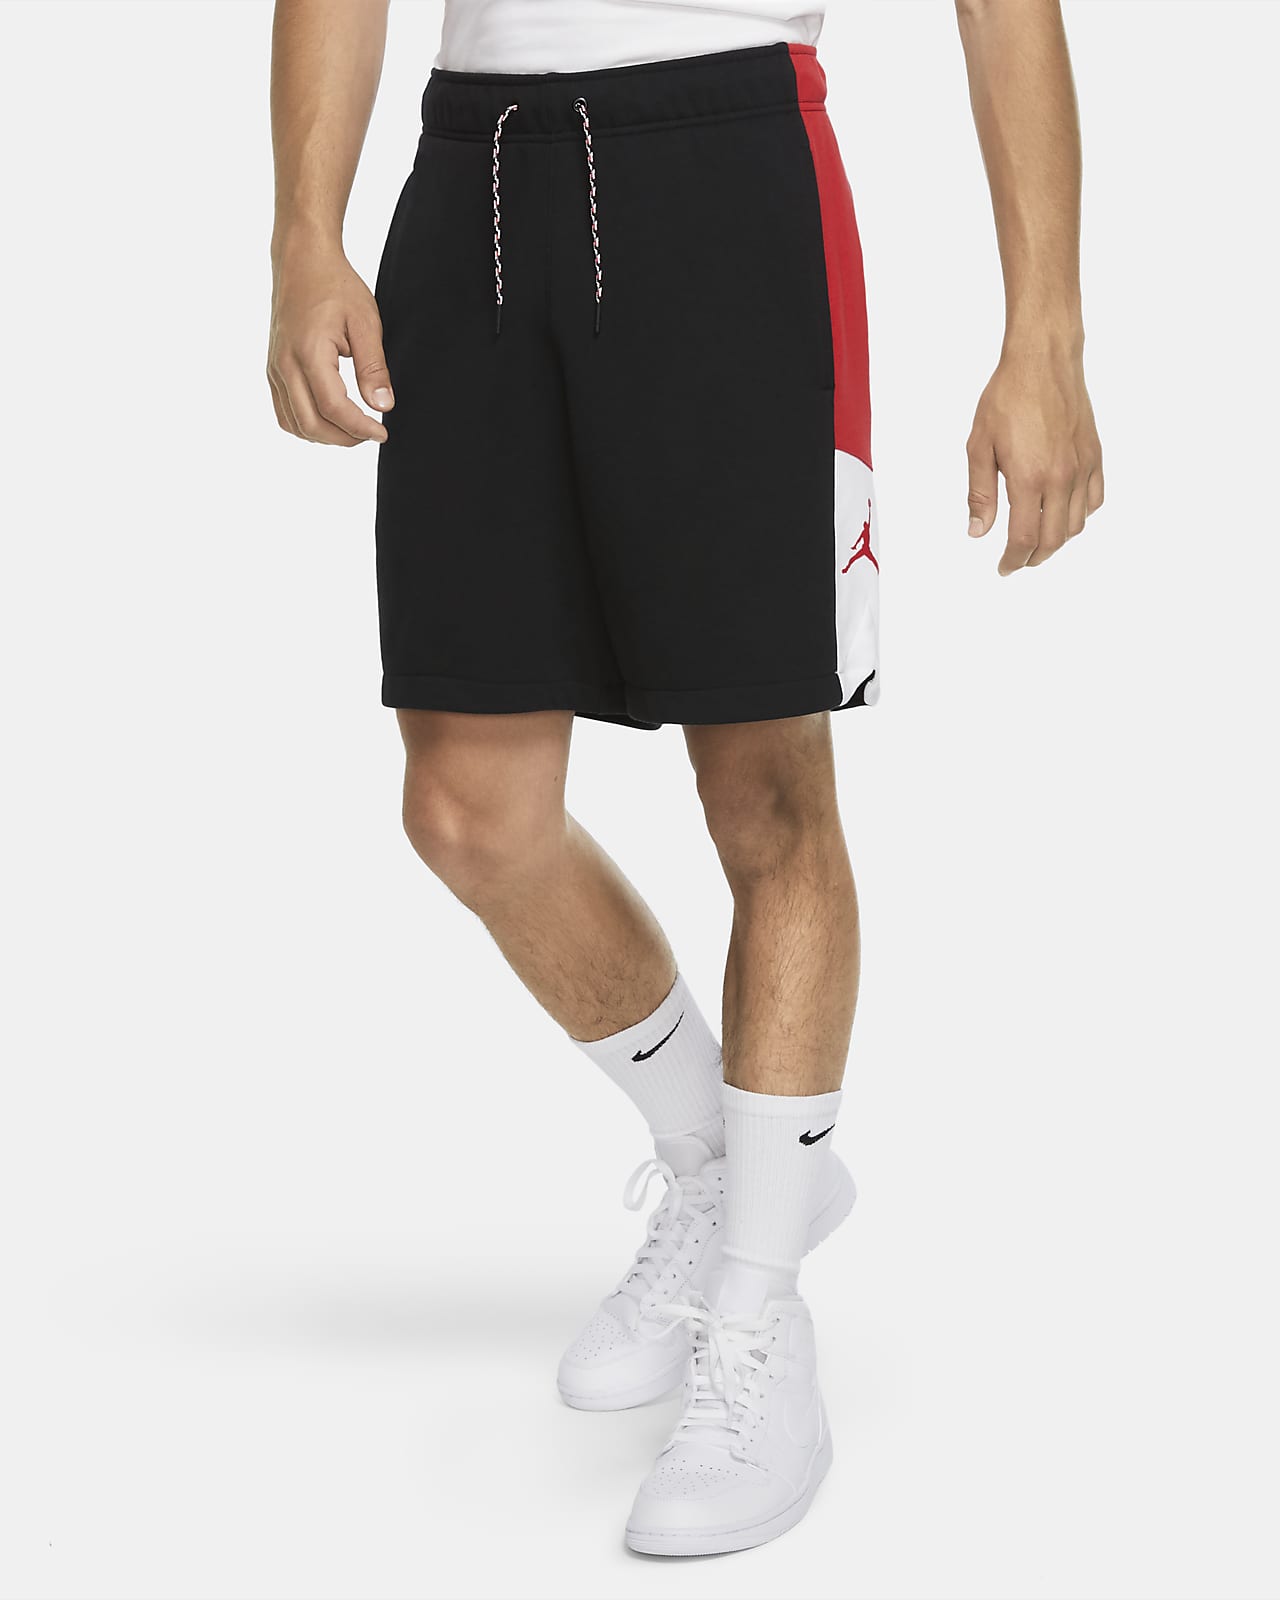 air jordan 1s with shorts